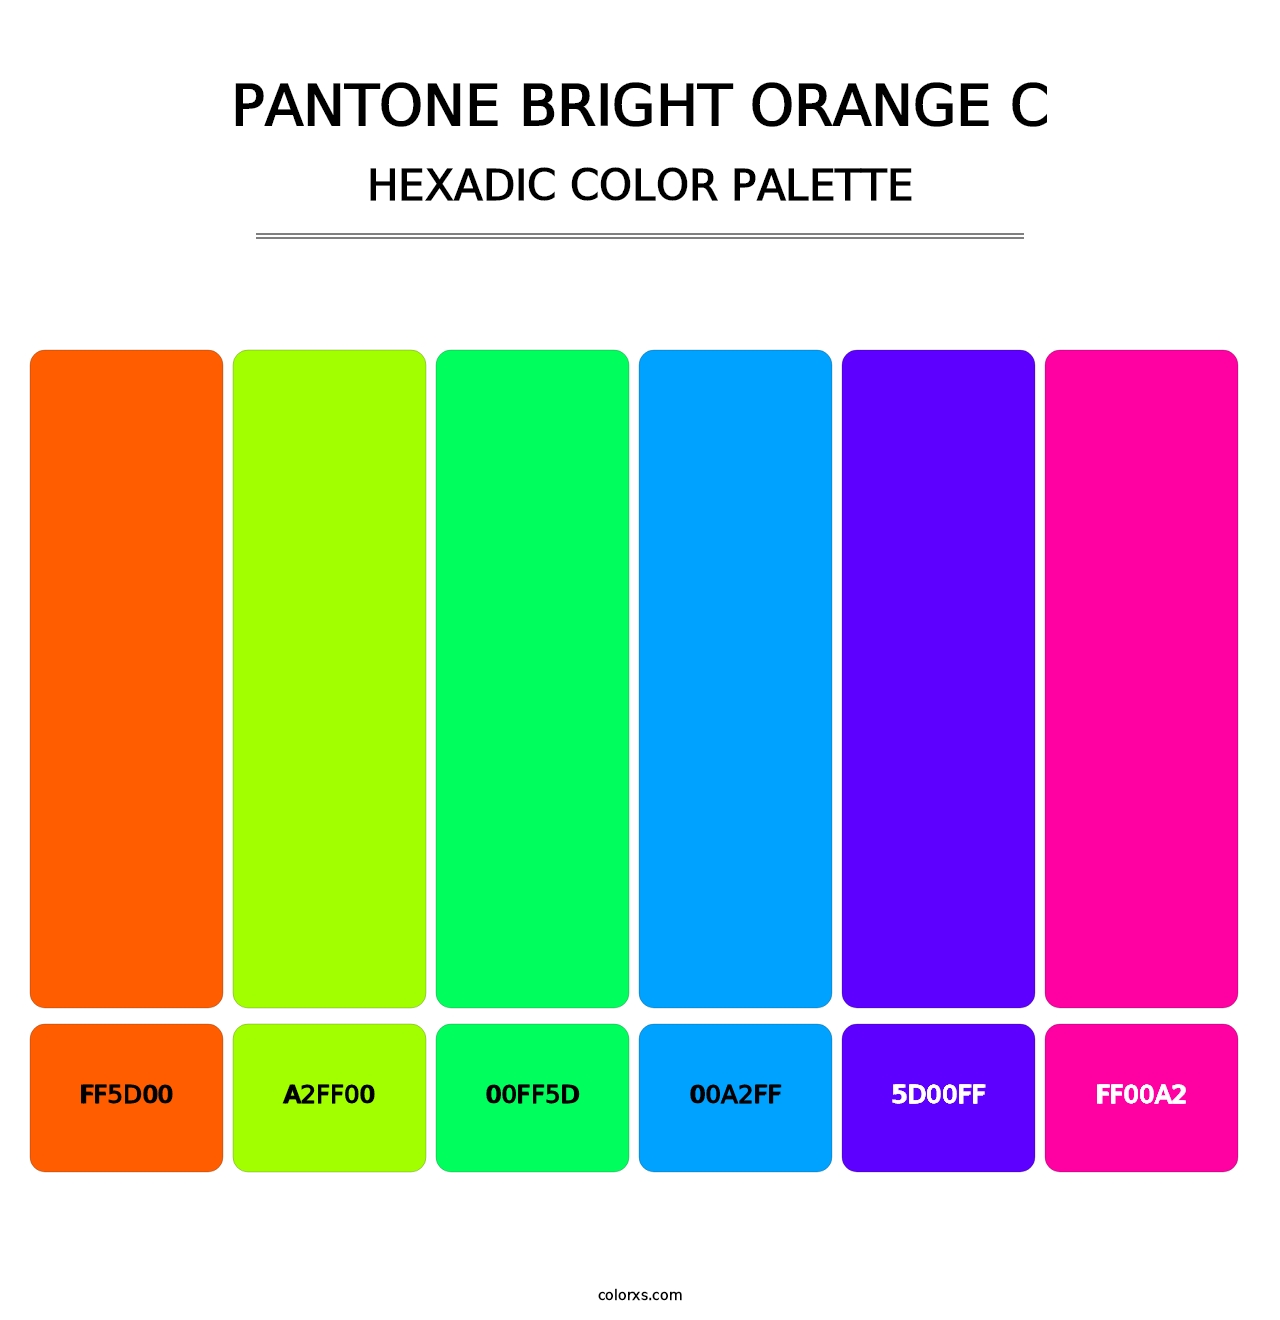 PANTONE Bright Orange C - Hexadic Color Palette